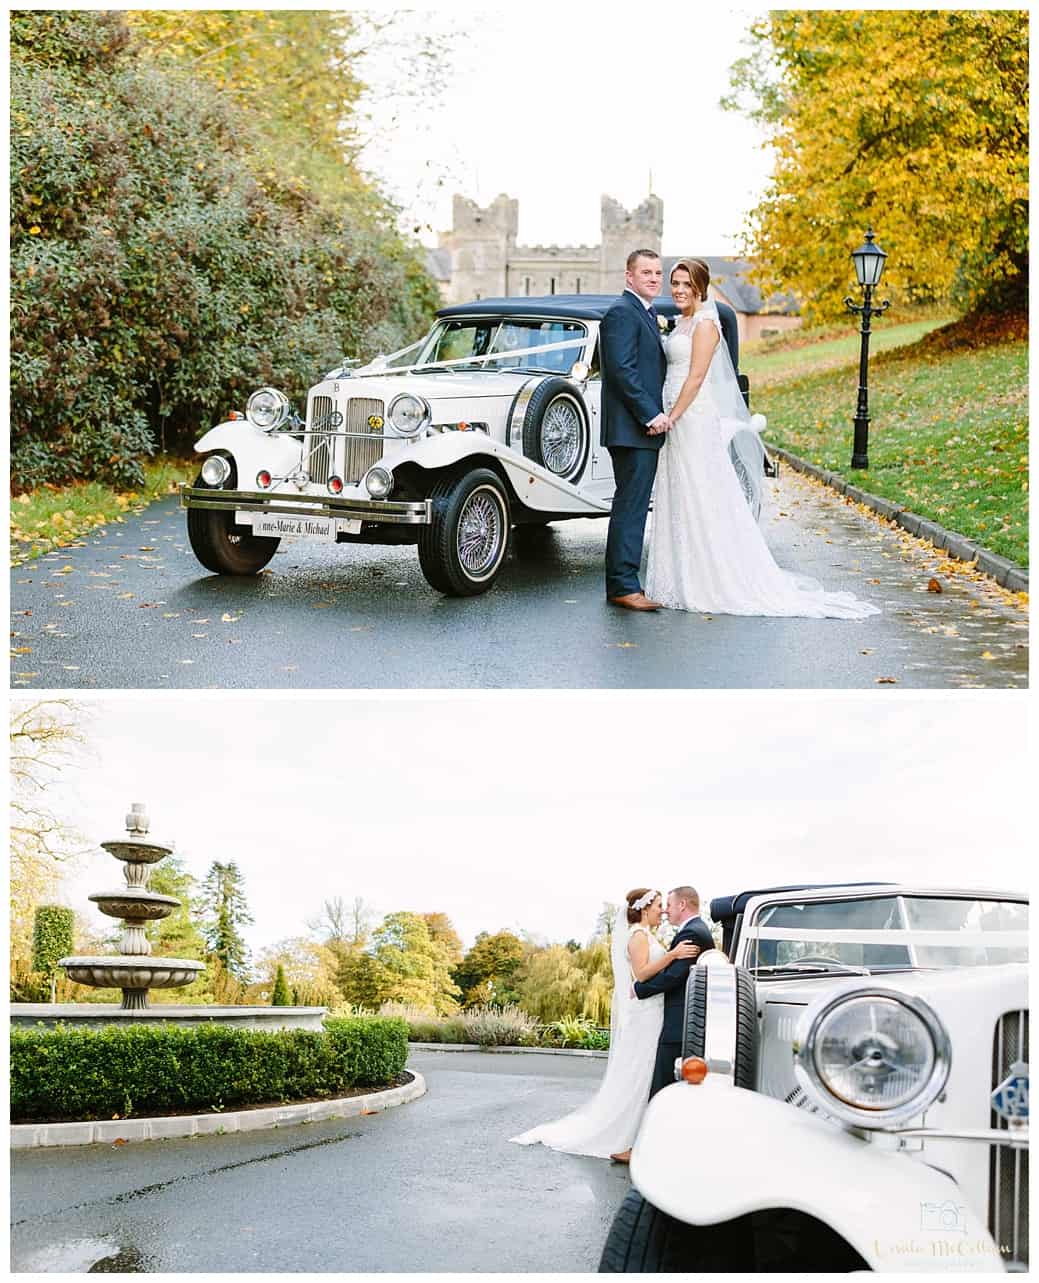 Bellingham Castle Wedding Photography